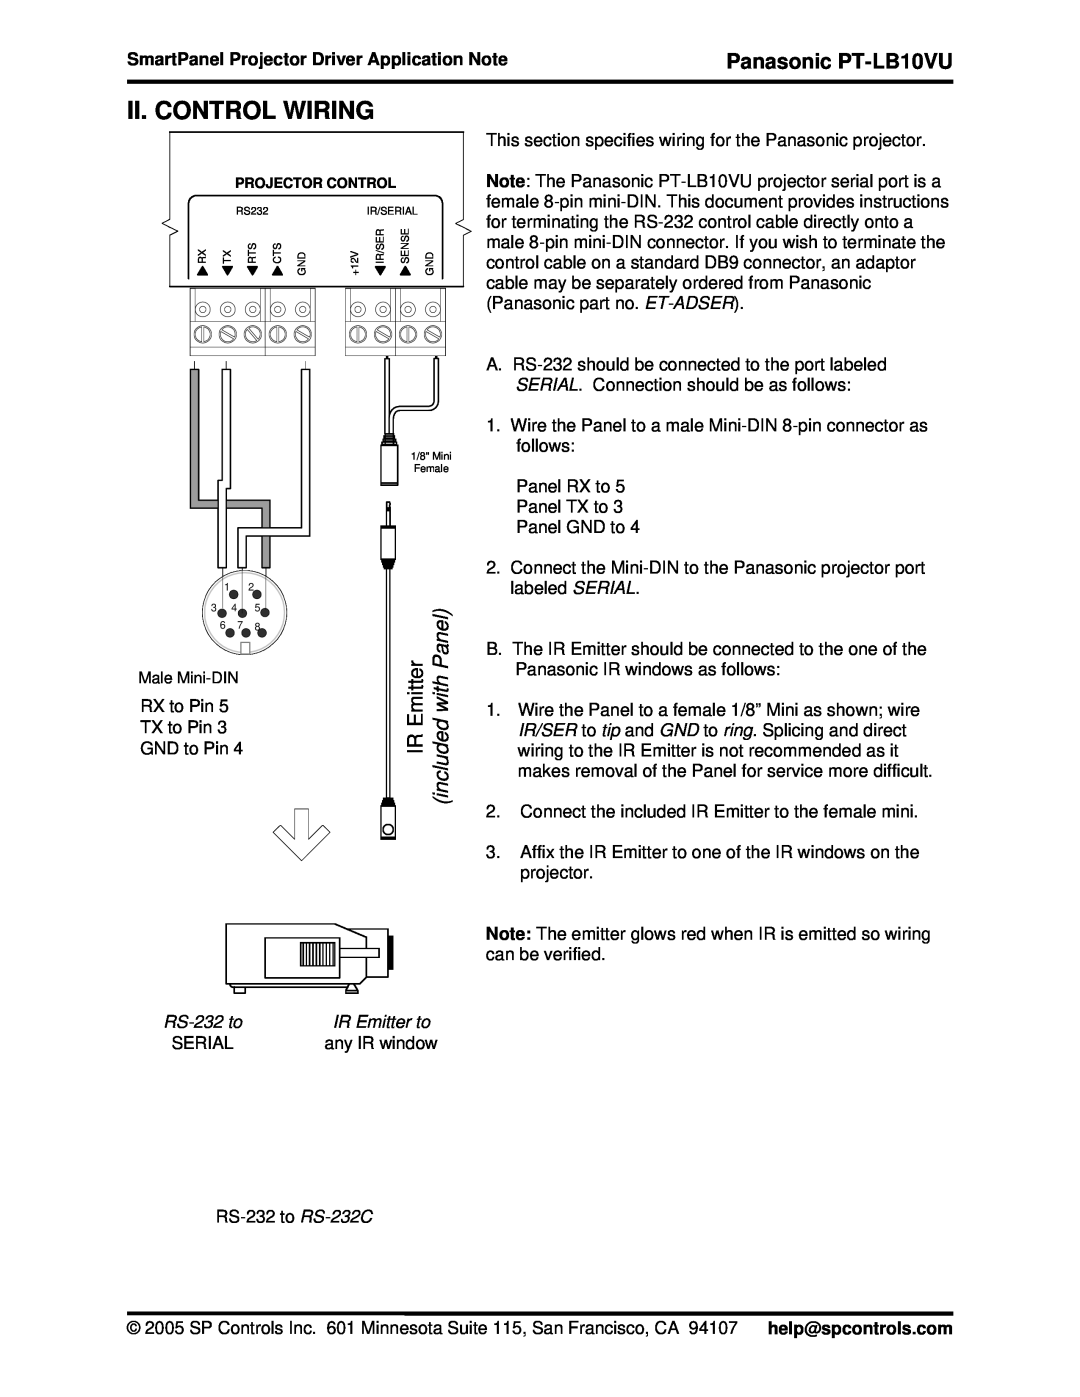 Philips quick start Ii. Control Wiring, Panasonic PT-LB10VU, SmartPanel Projector Driver Application Note 